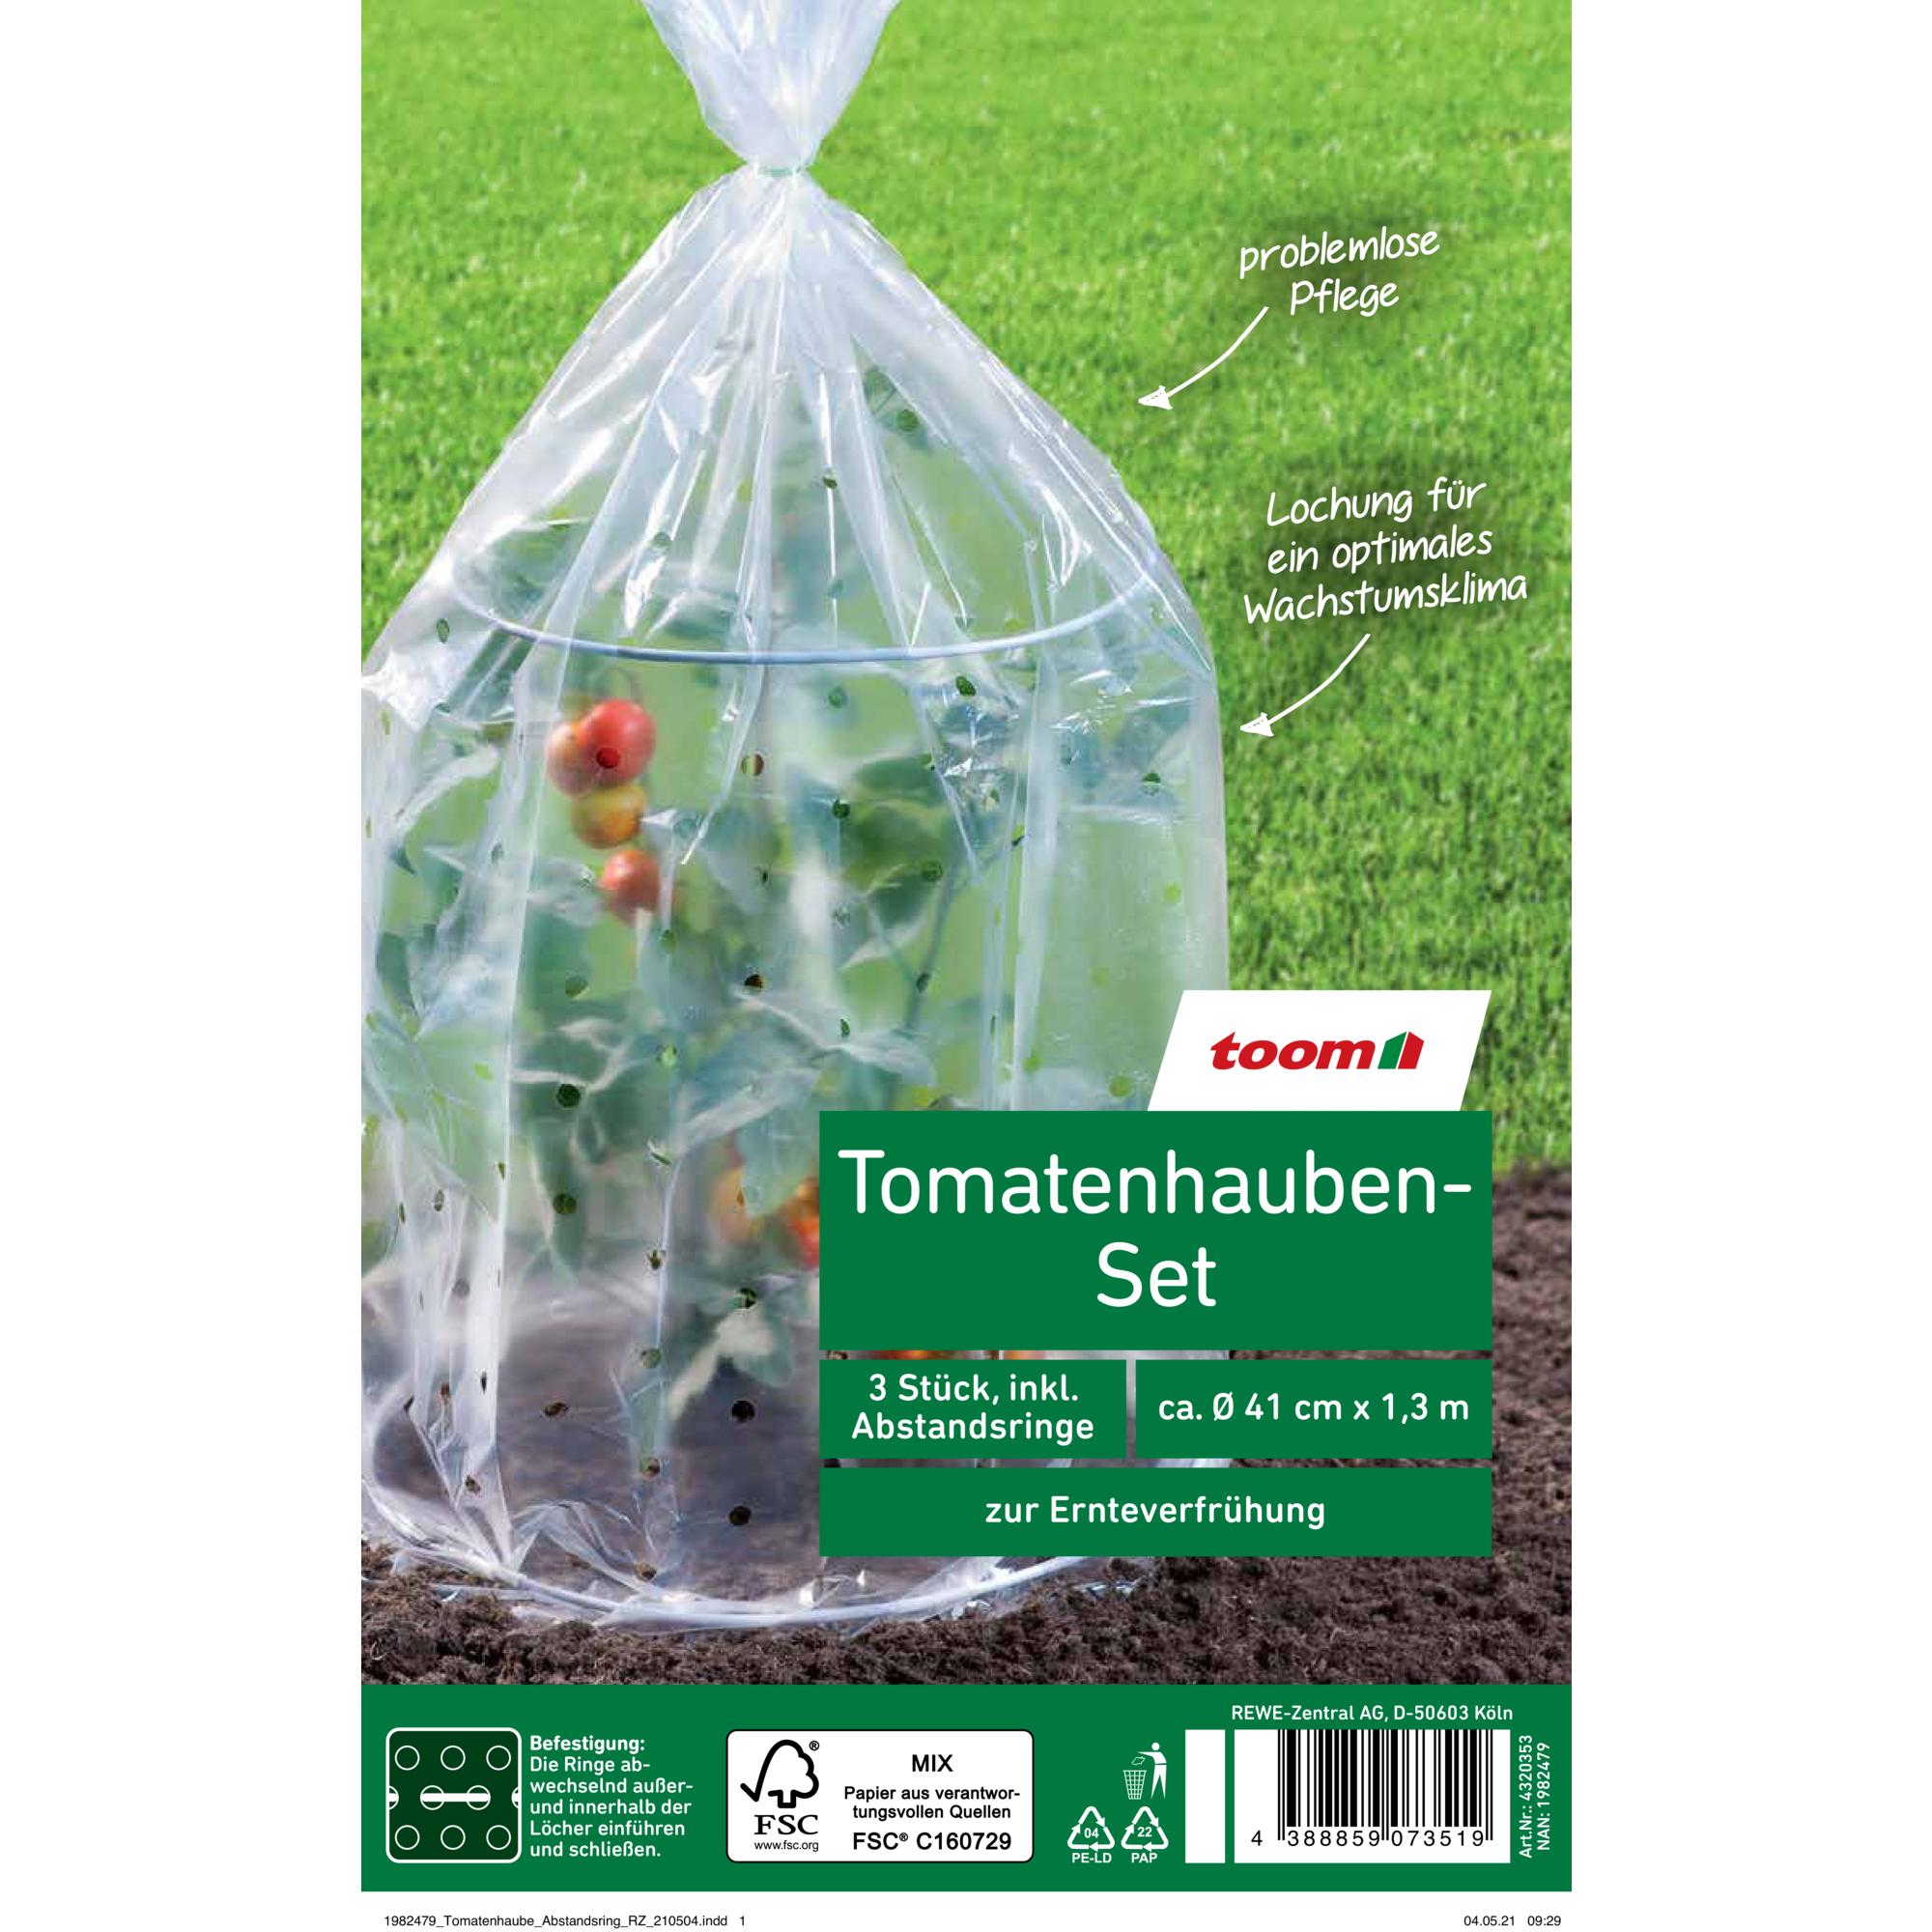 Tomatenhauben-Set transparent Ø 0,41 x 1,3 m, 3 Stück + product picture